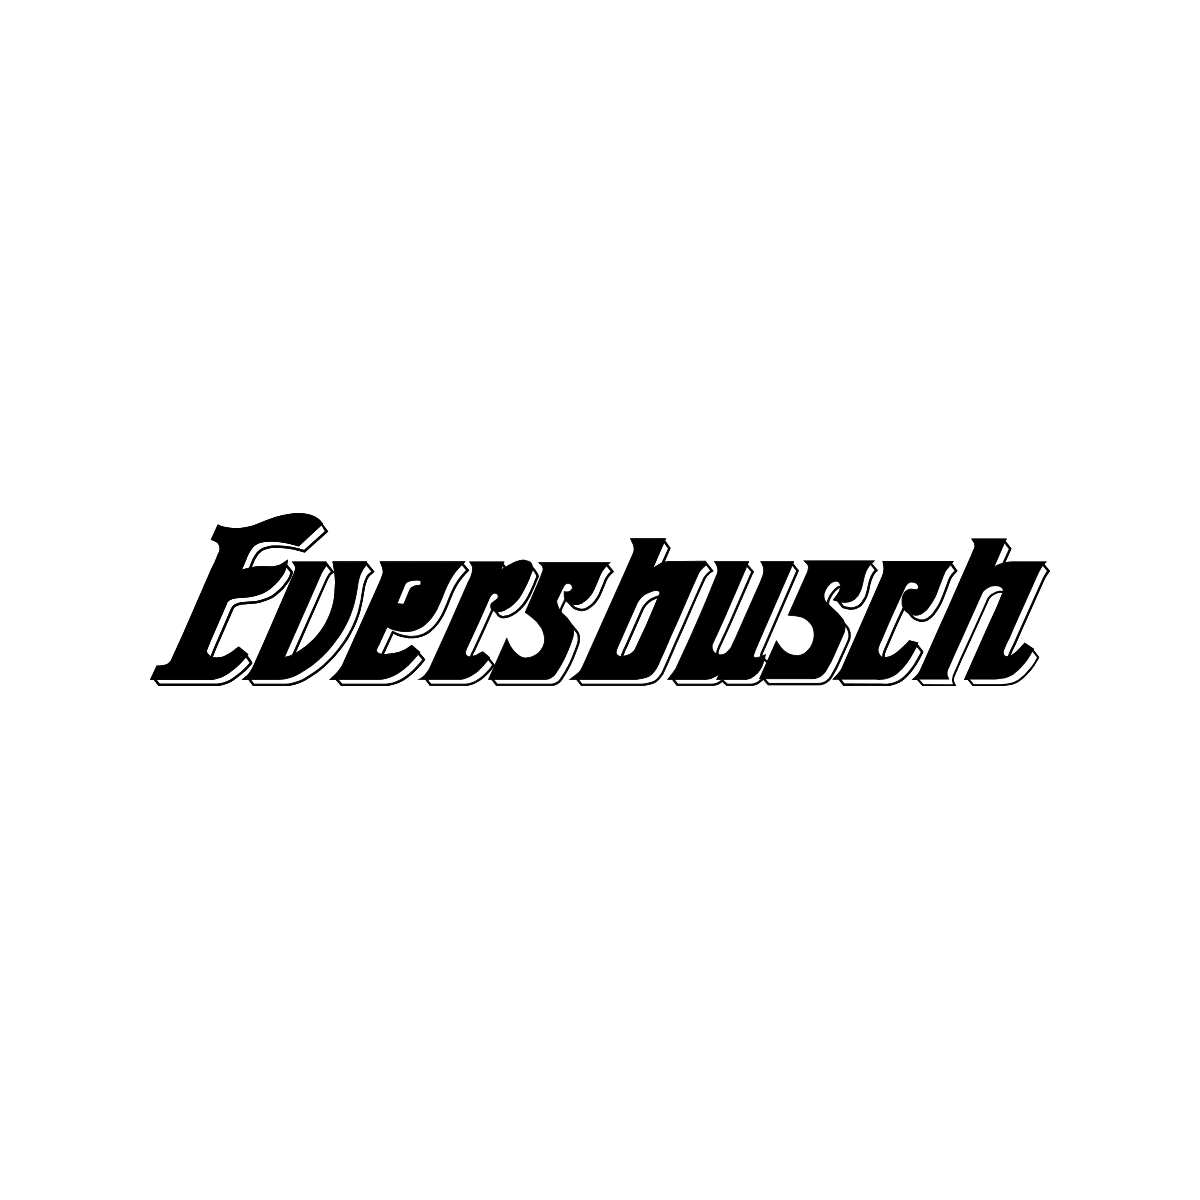 Eversbusch Logo